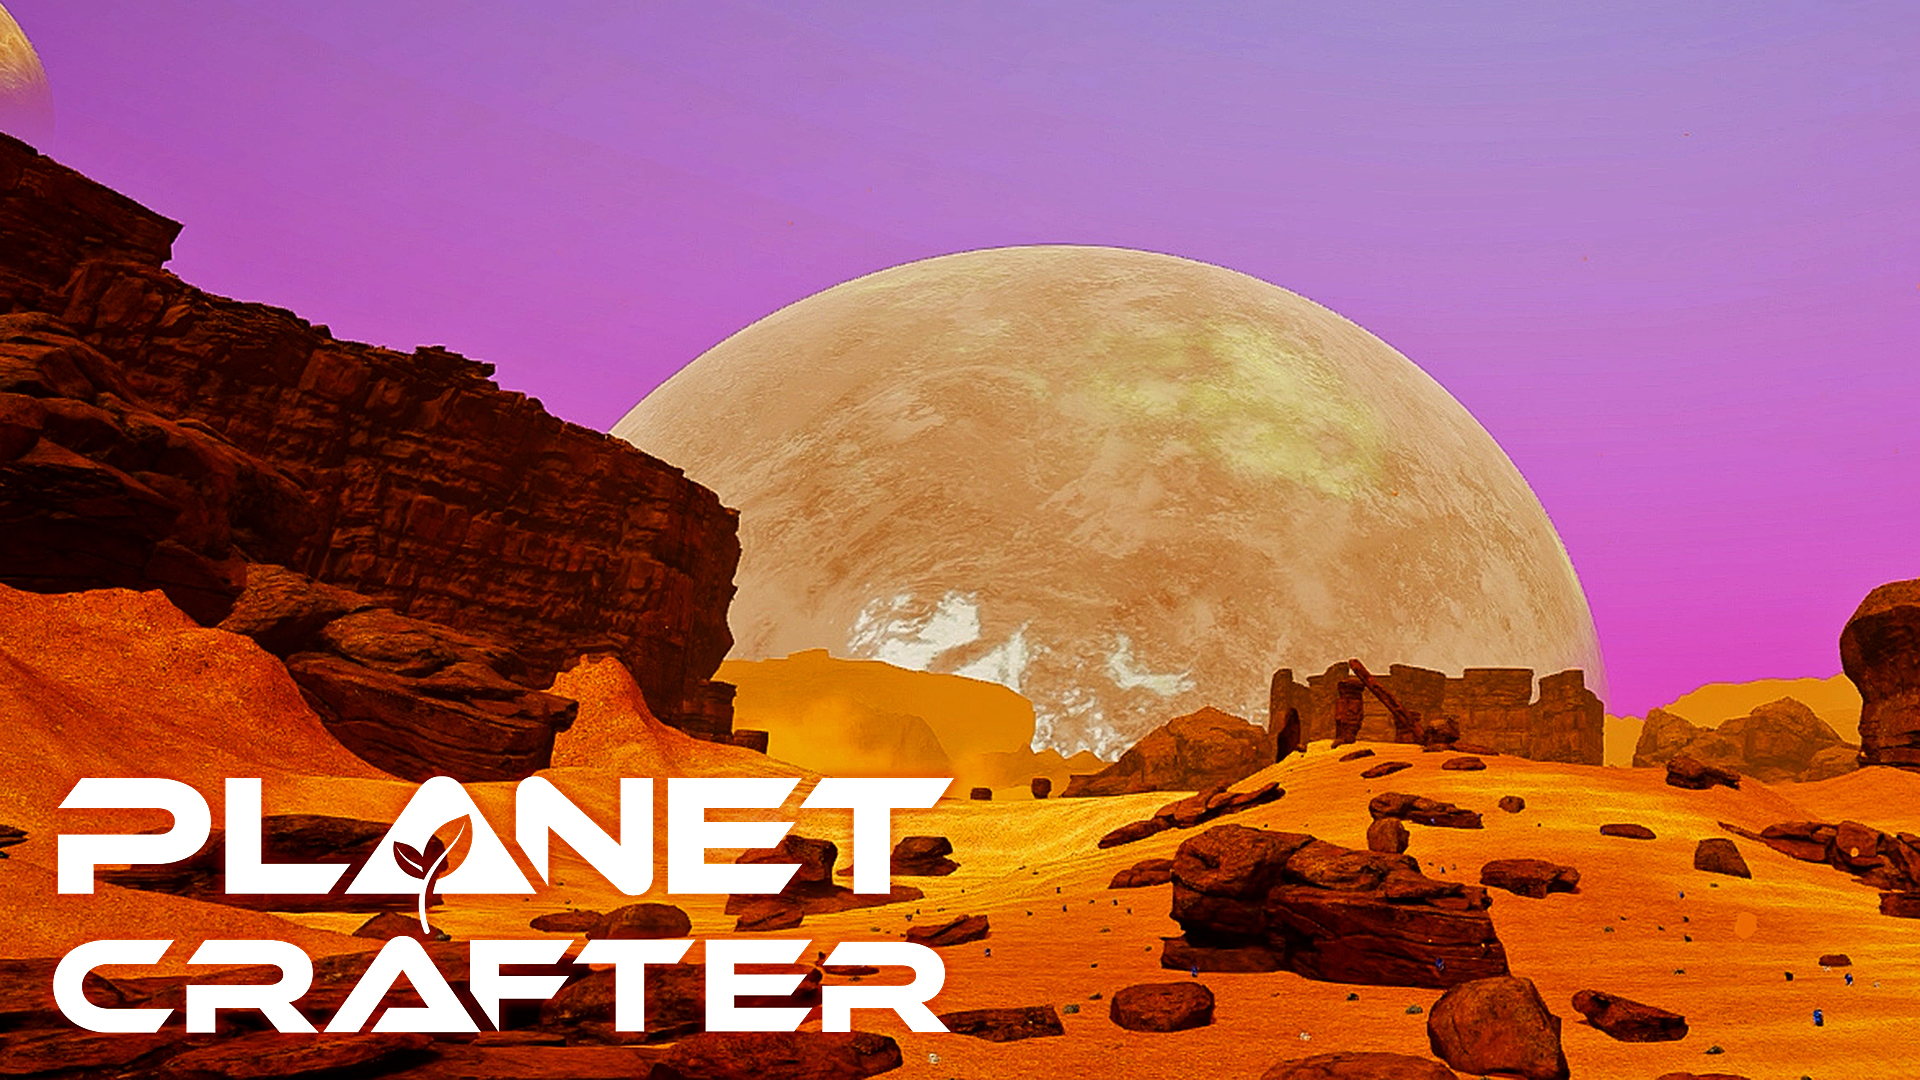 The Planet Crafter алюминий. The Planet Crafter: Prologue. Зе планет Крафтер Пролог. Planet Crafter базы.